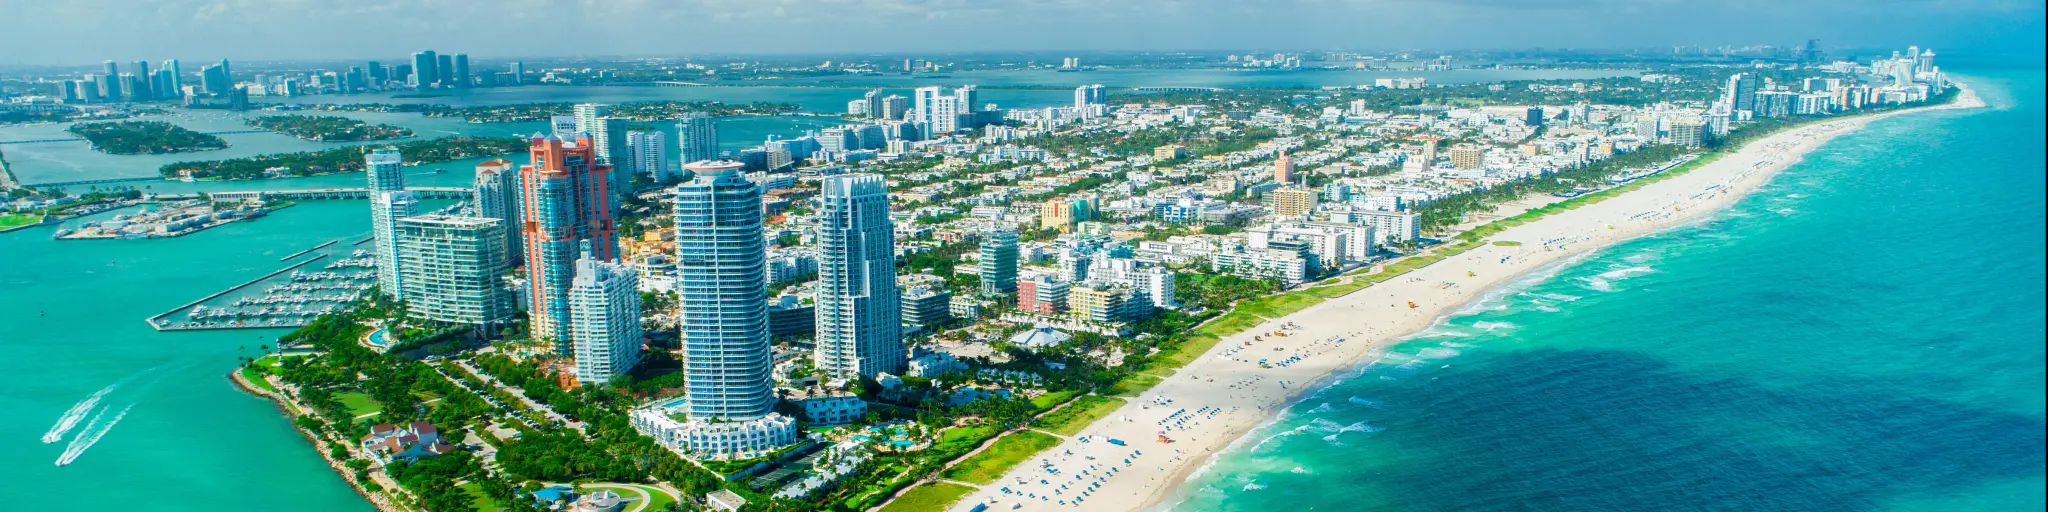 Stunning aerial shot of Miami Beach, South Beach, Florida, USA.